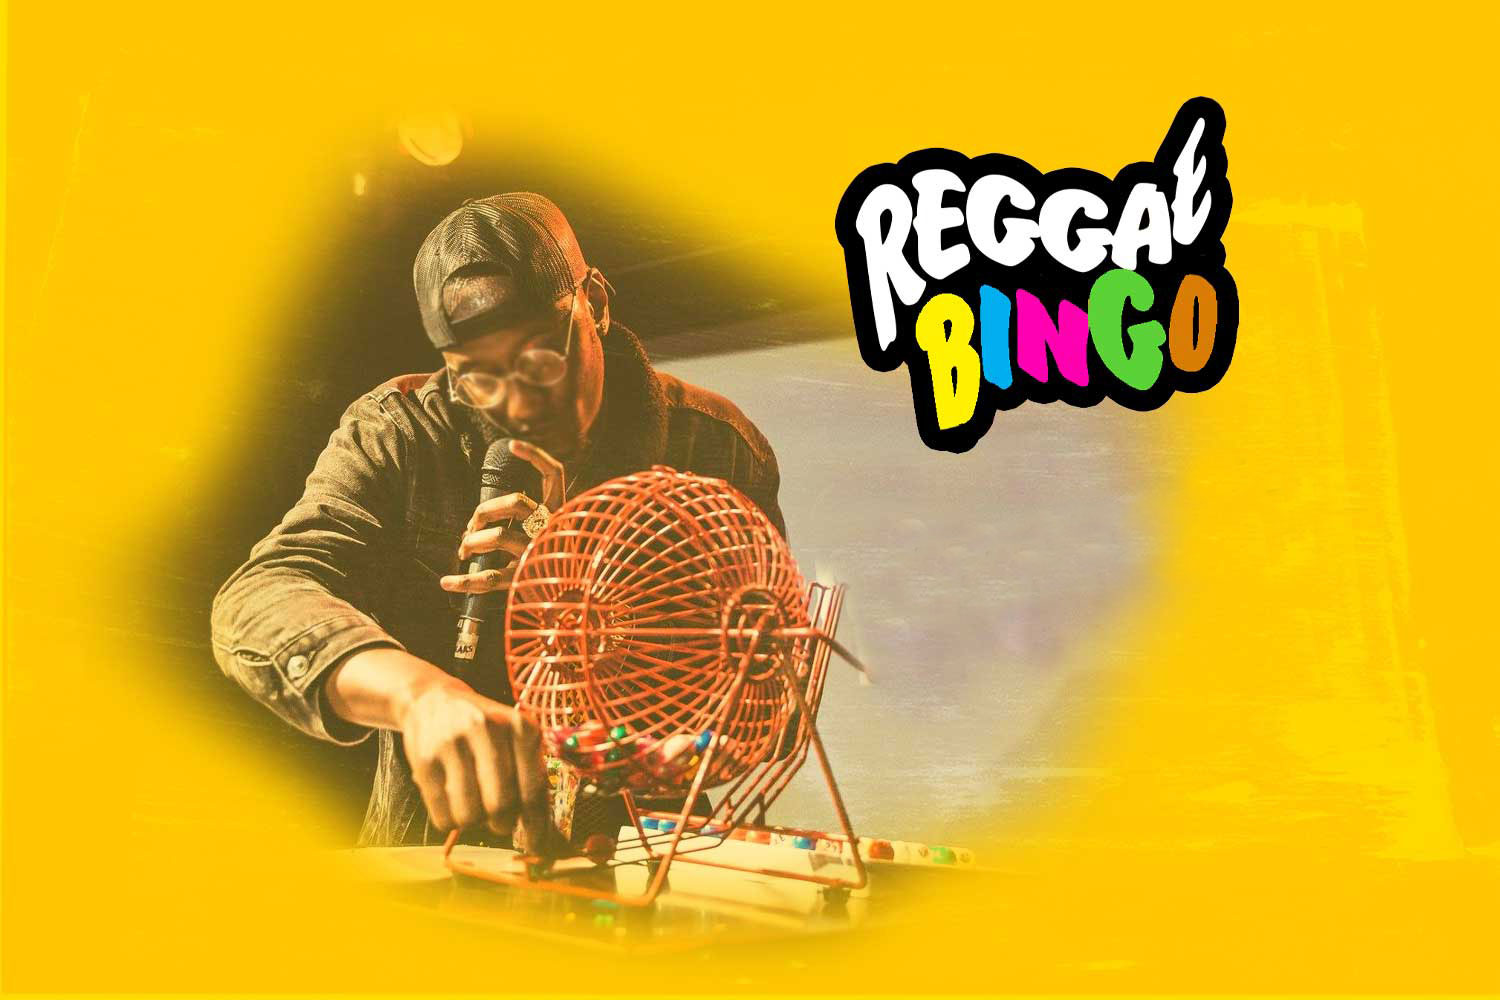 Fri 9th Dec 2022 - Reggae Bingo